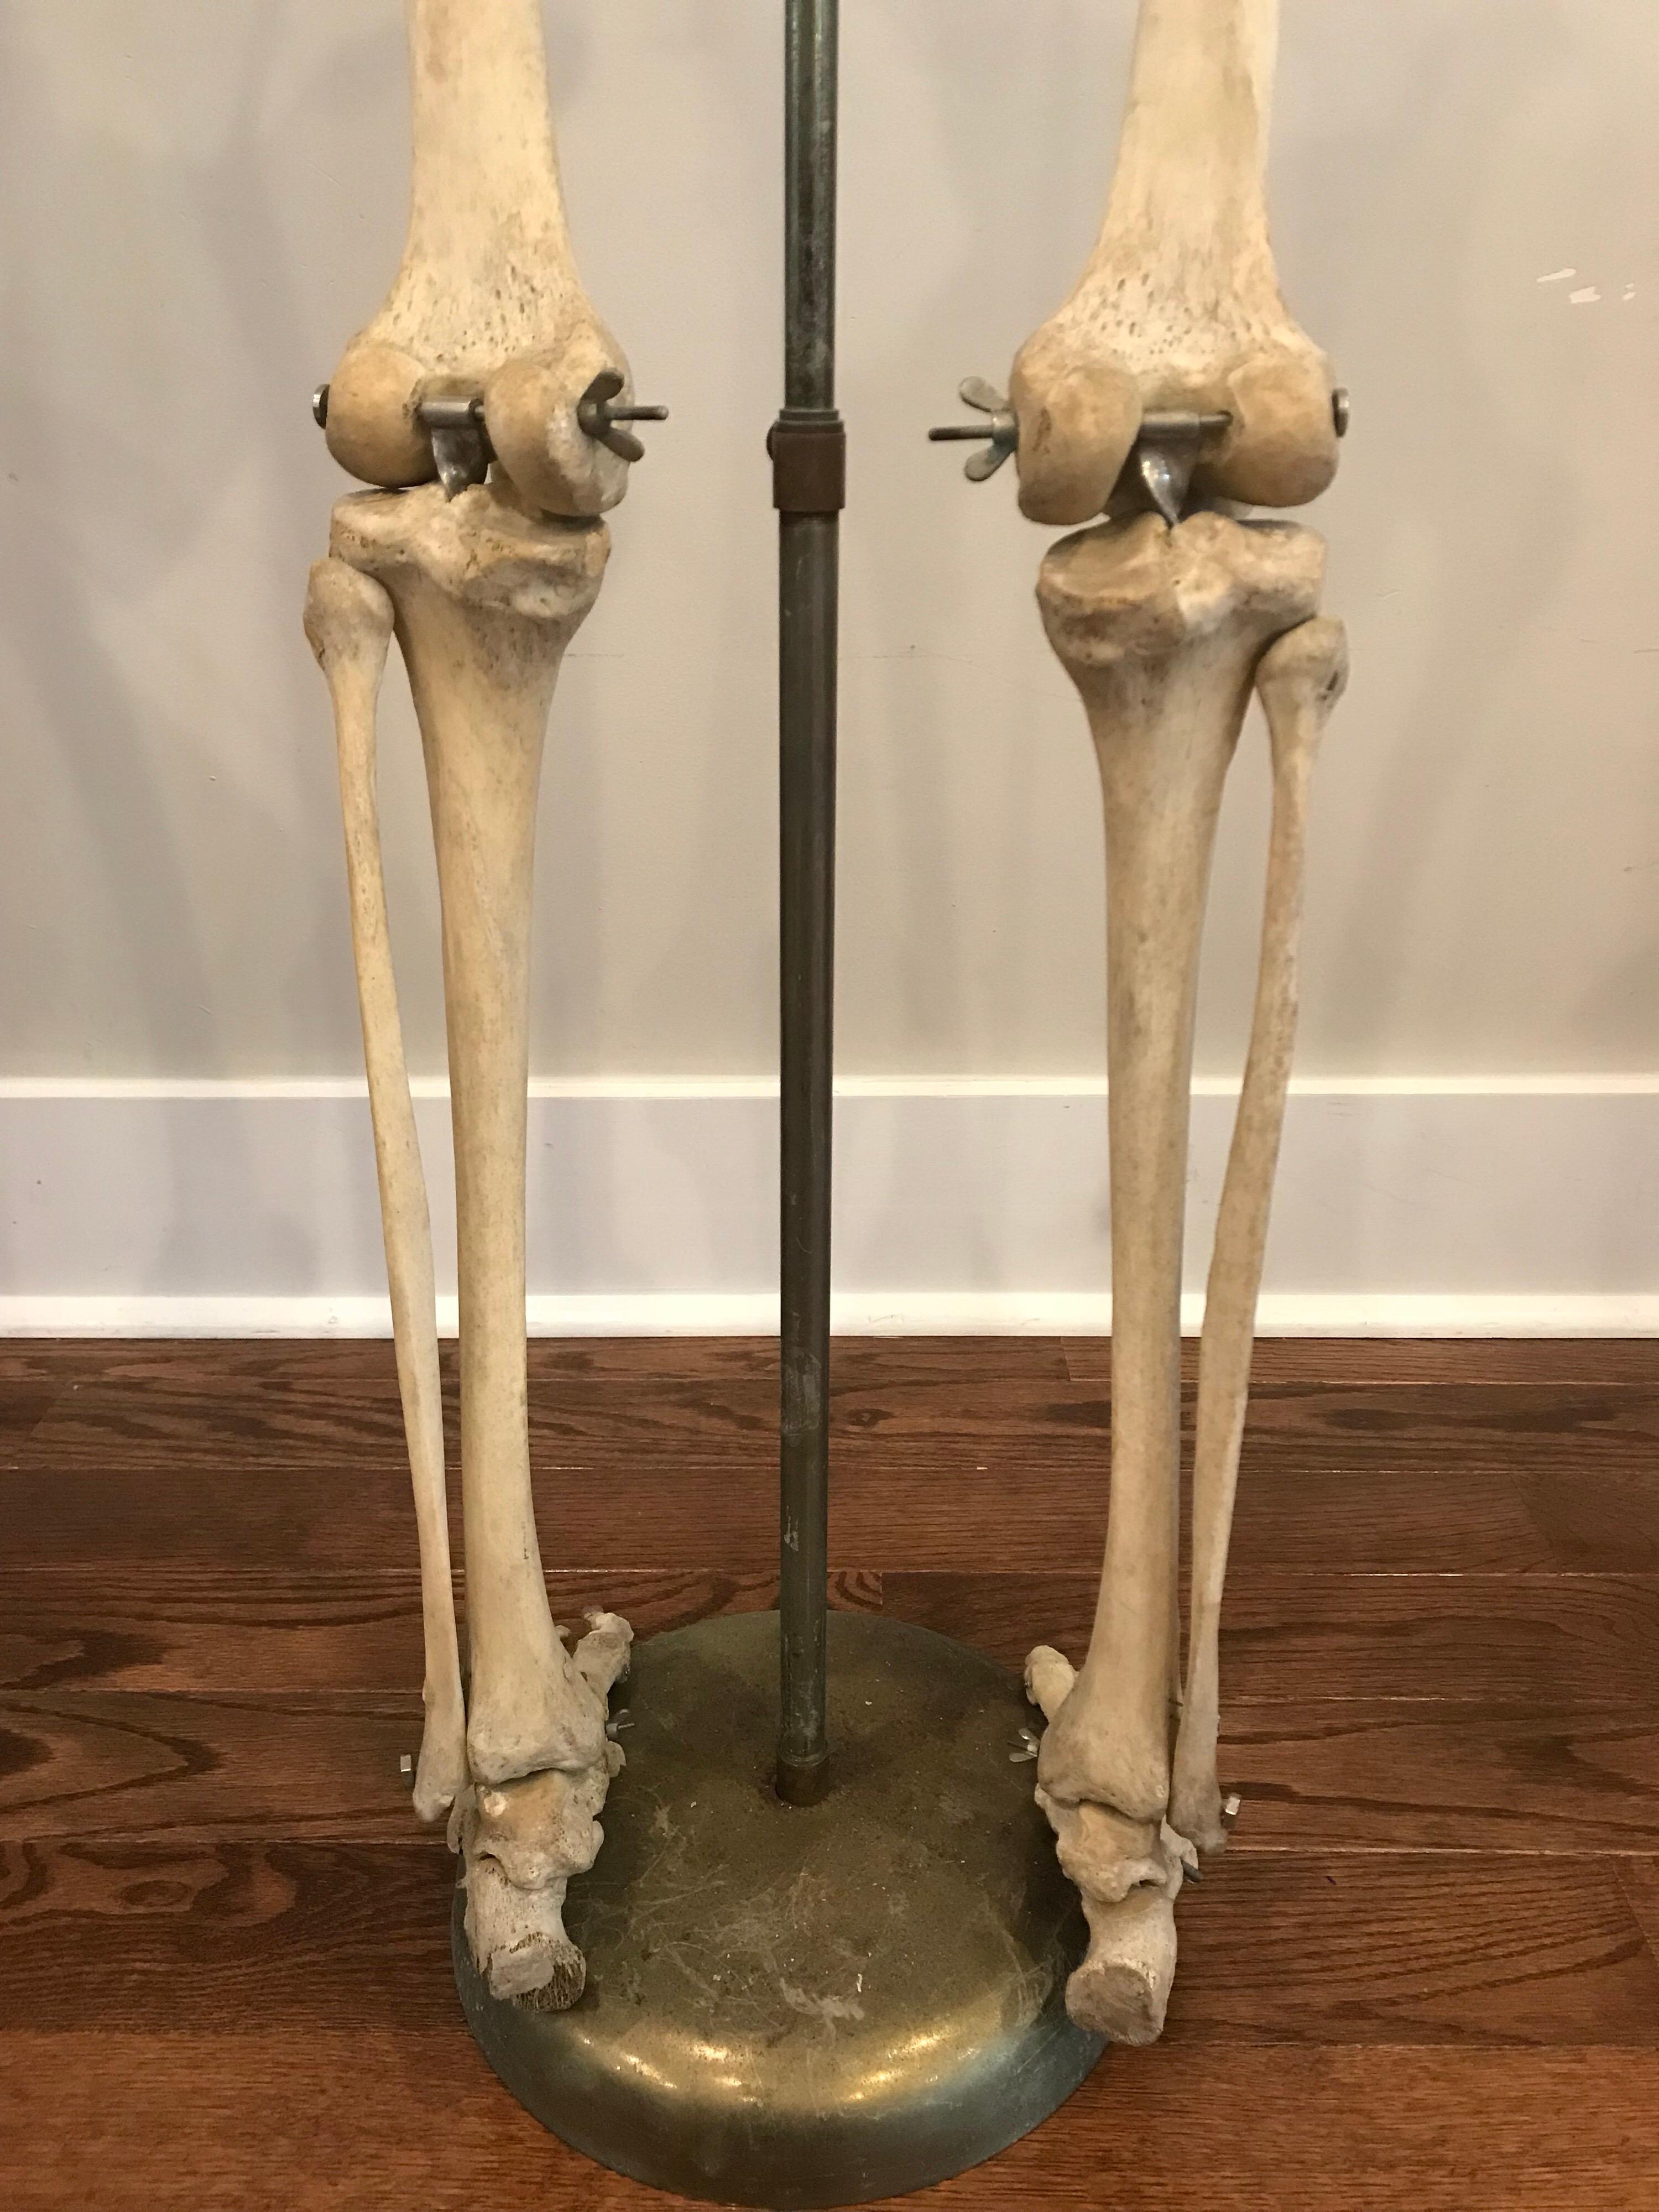 Steel Real Human Skeleton of Articulating Lower Extremities Leg & Foot Bones on Stand